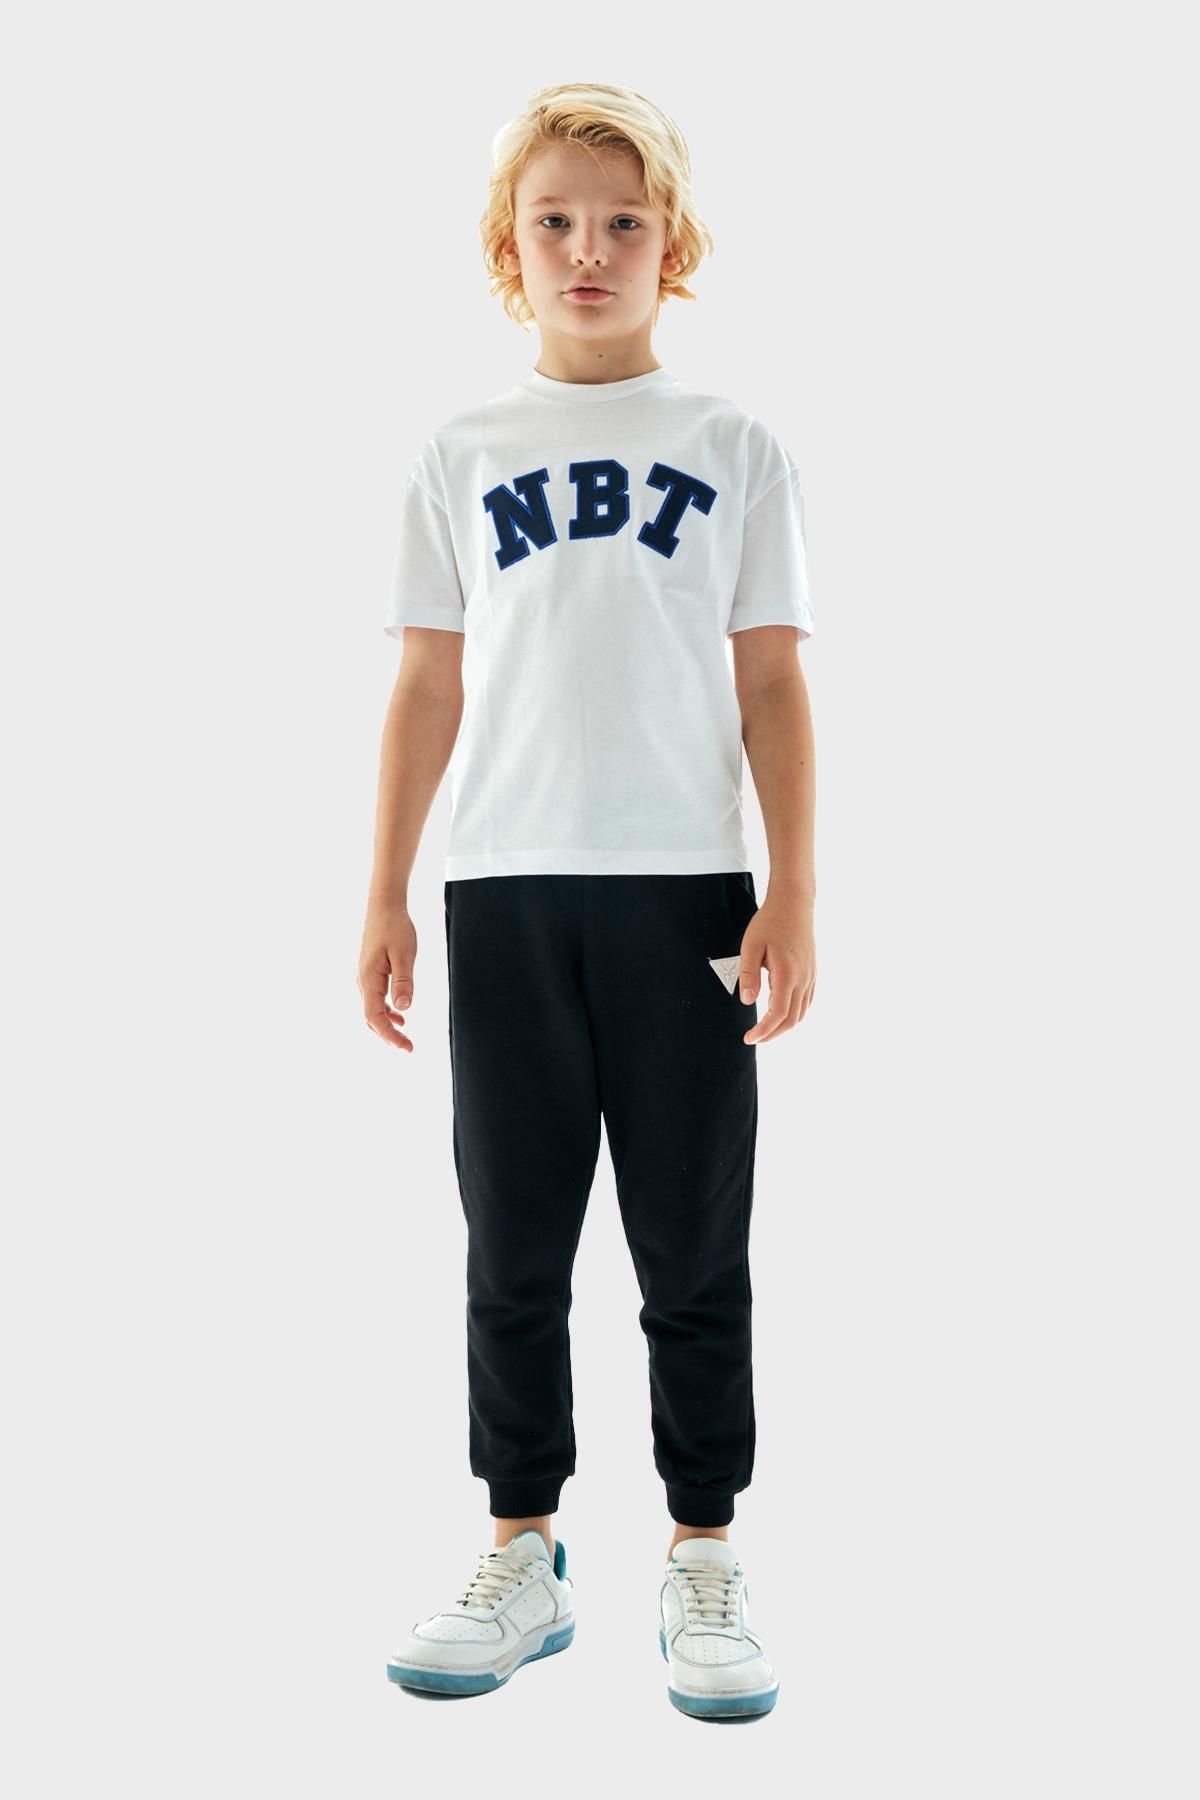 Nebbati Erkek Çocuk Beyaz T-Shirt 23PFWNB3534